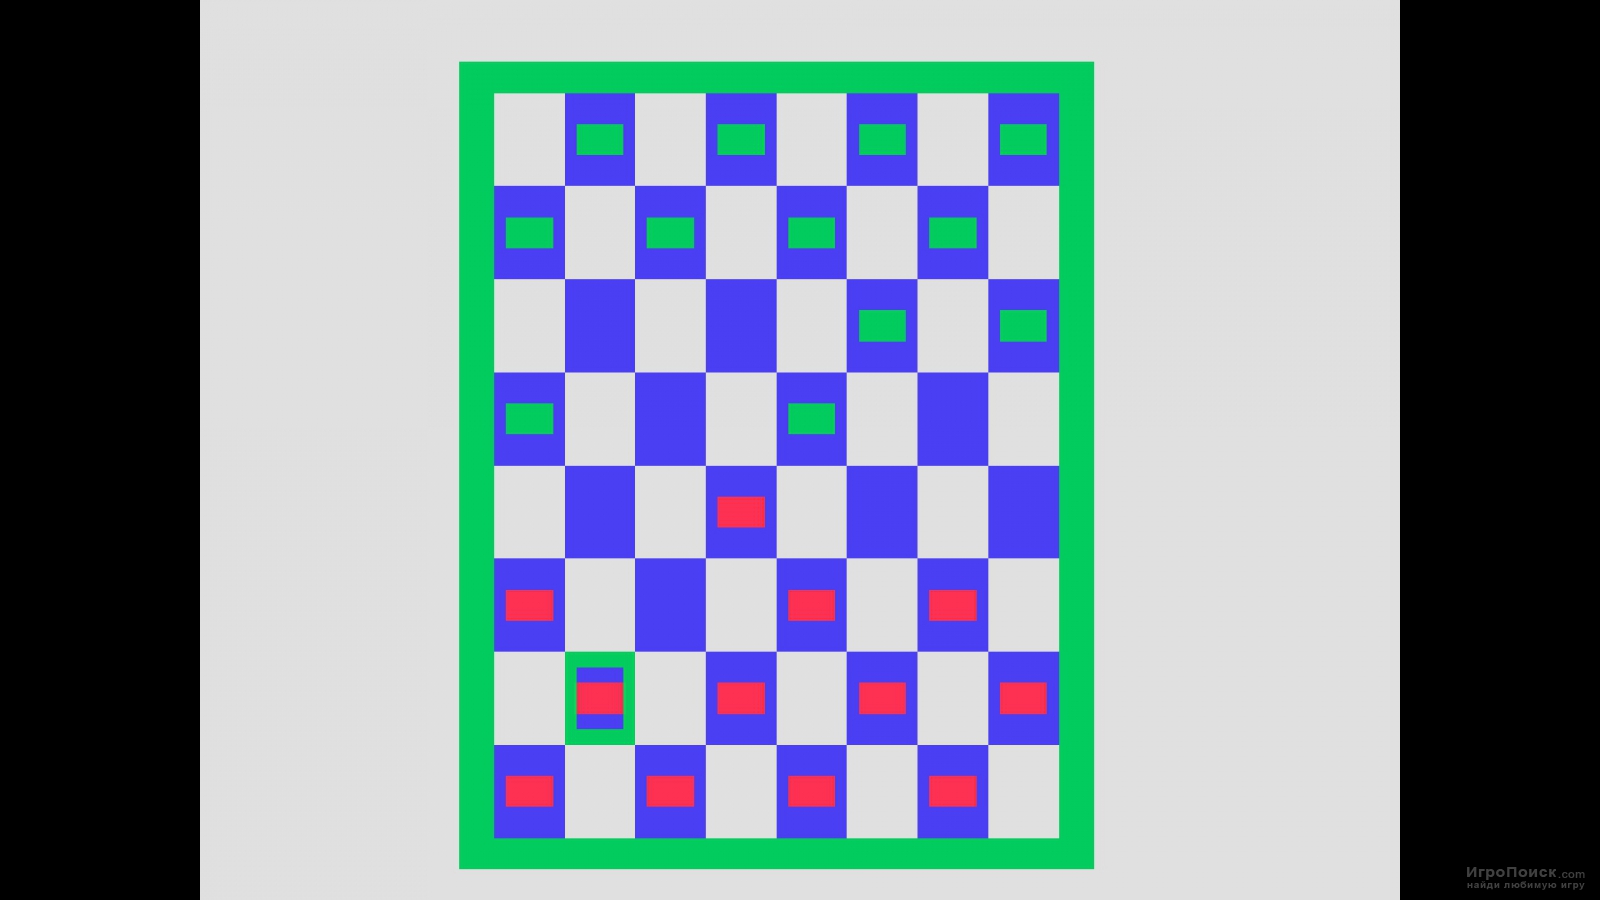    Checkers